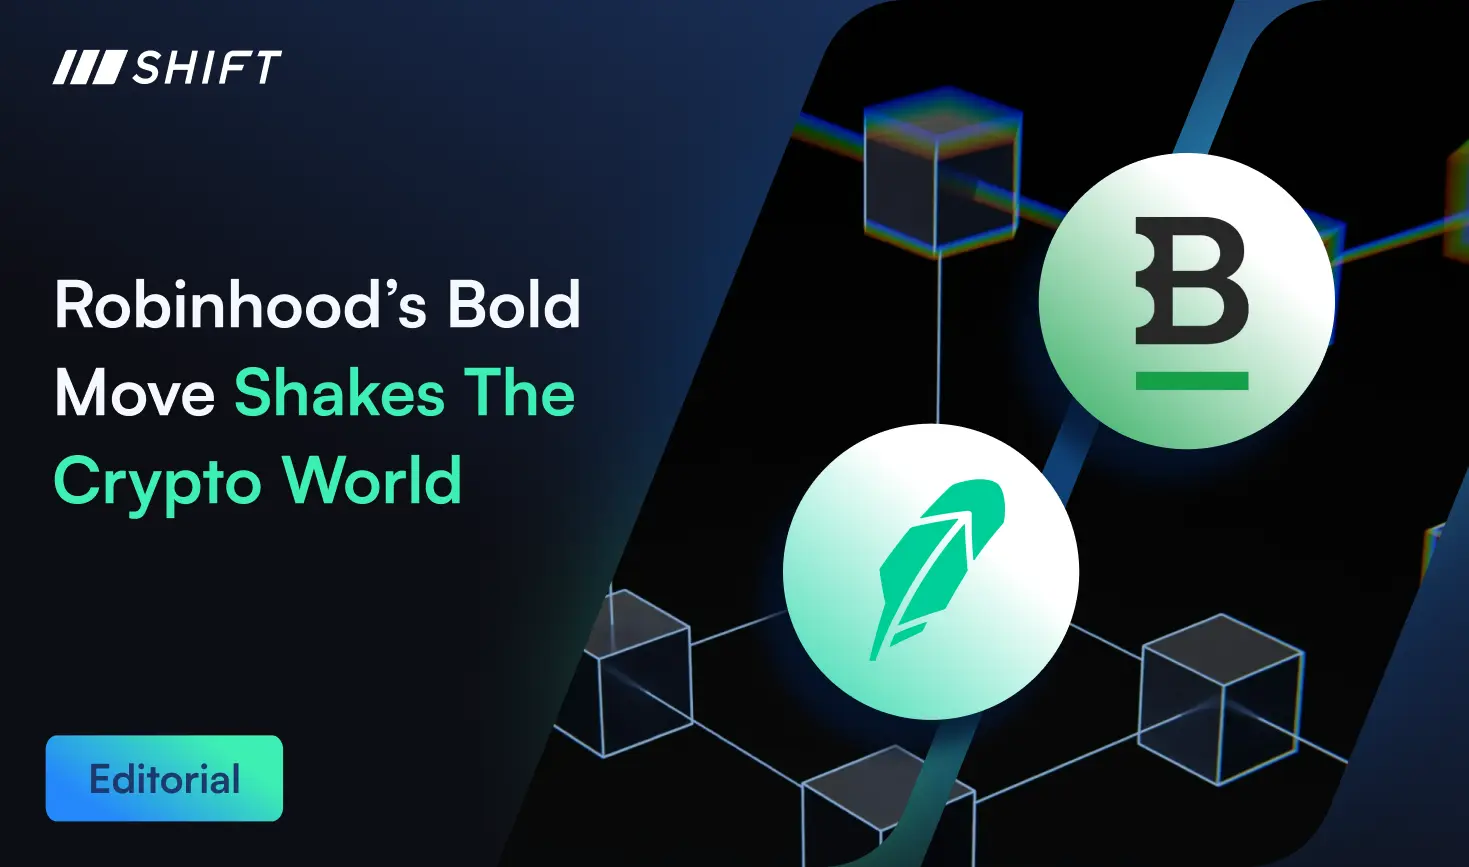 Robinhood's acquisition of Bitstamp has sent a shockwave through the digital asset industry.